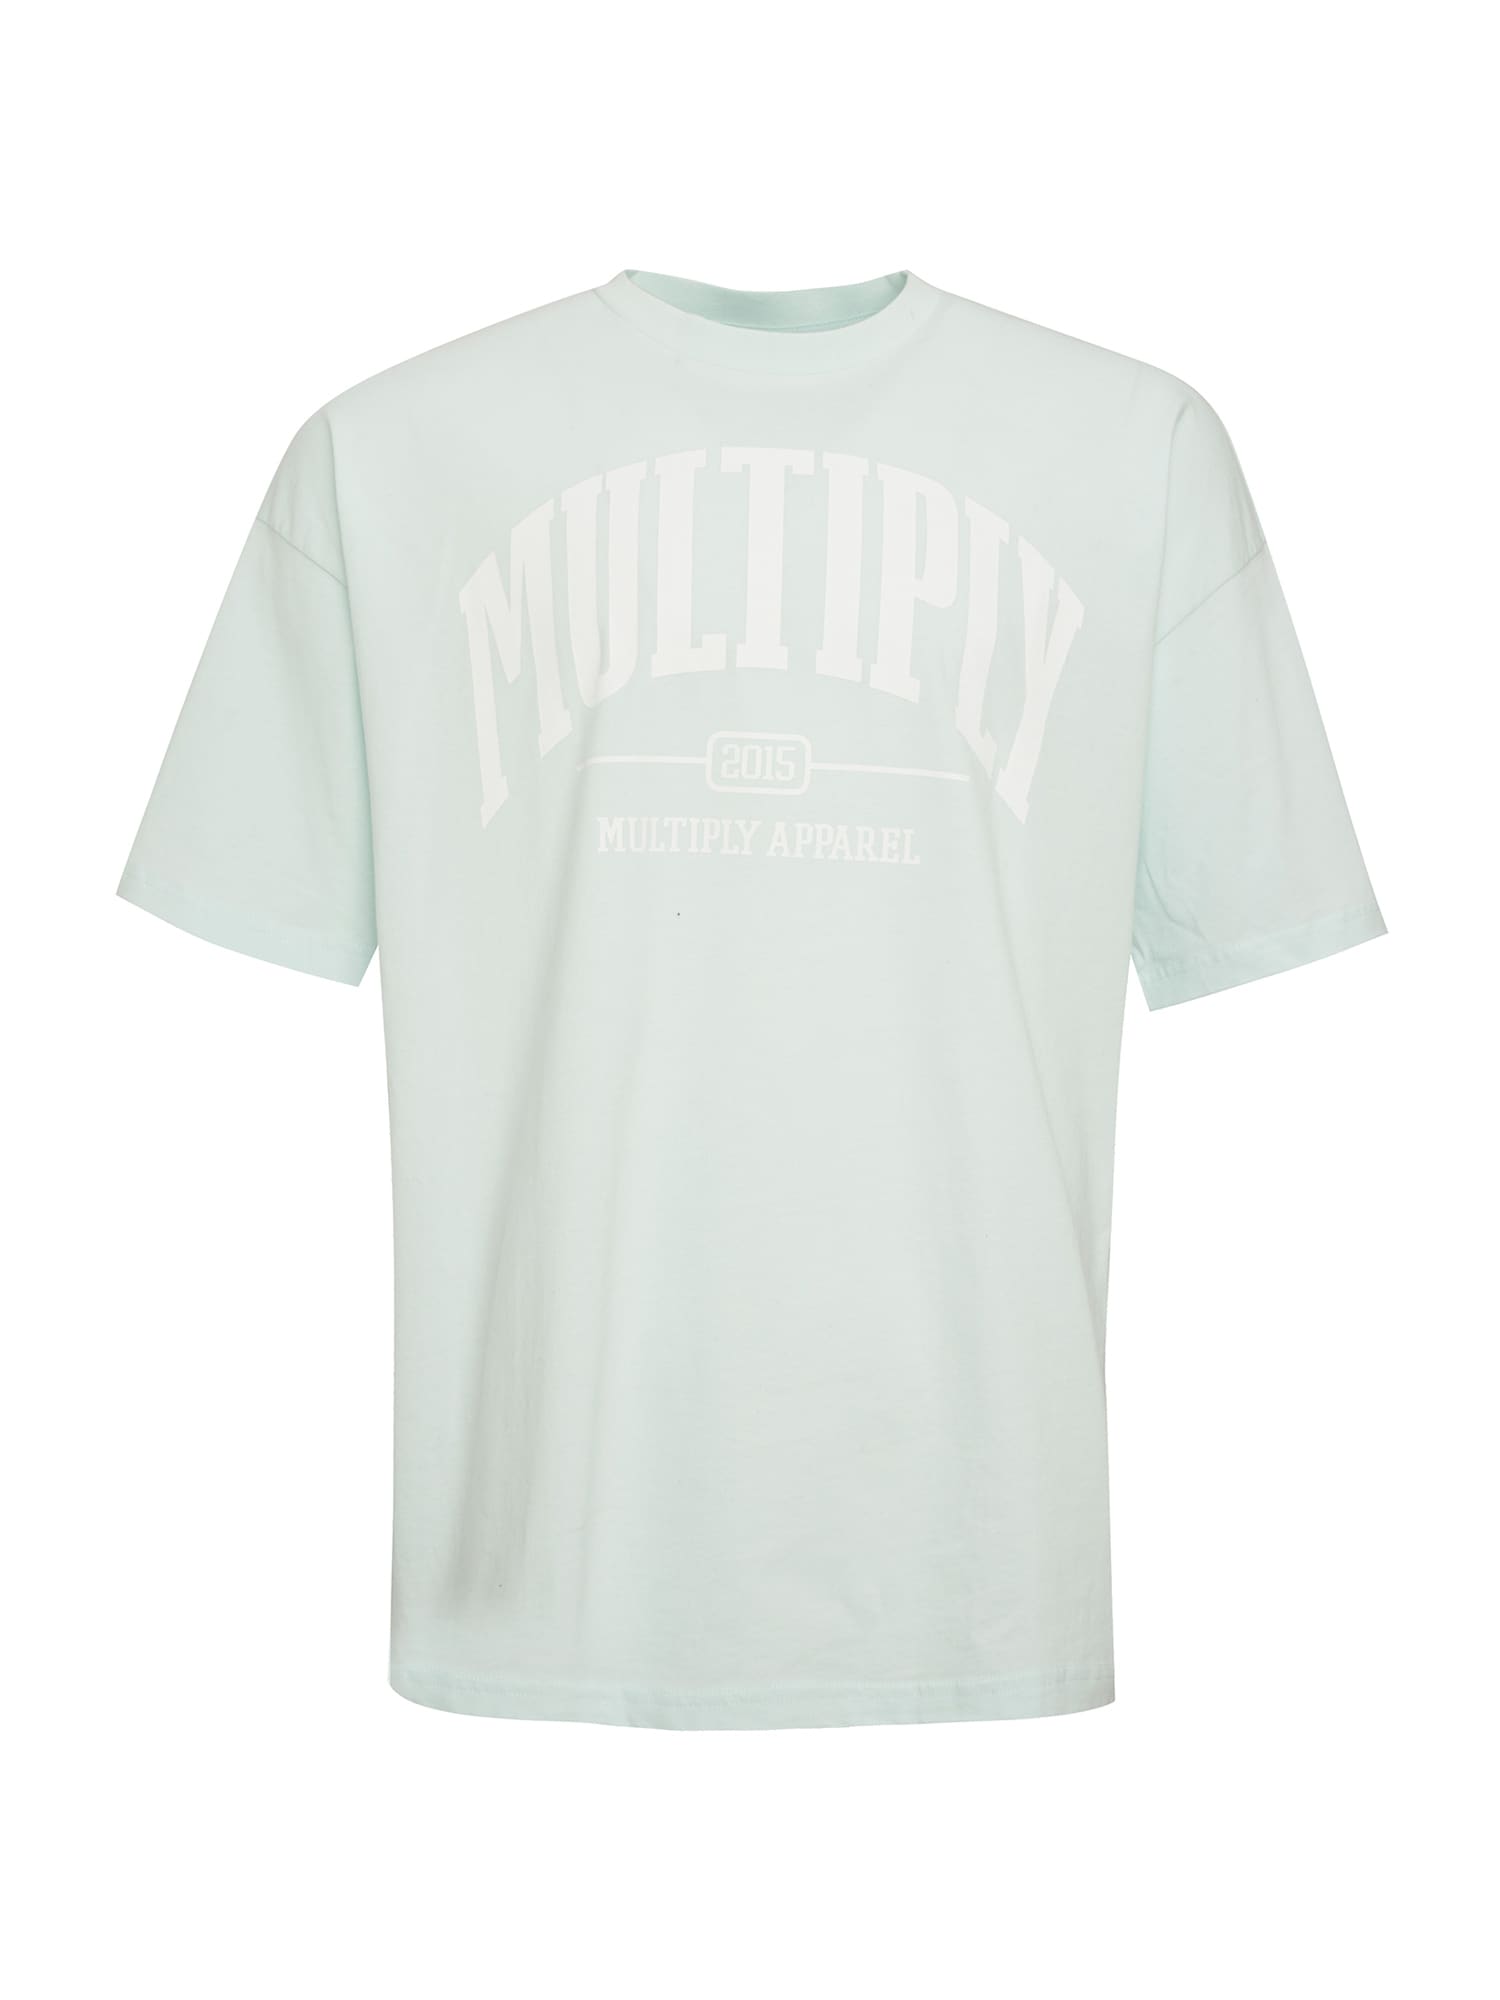 Multiply Apparel Majica  pastelno modra / bela